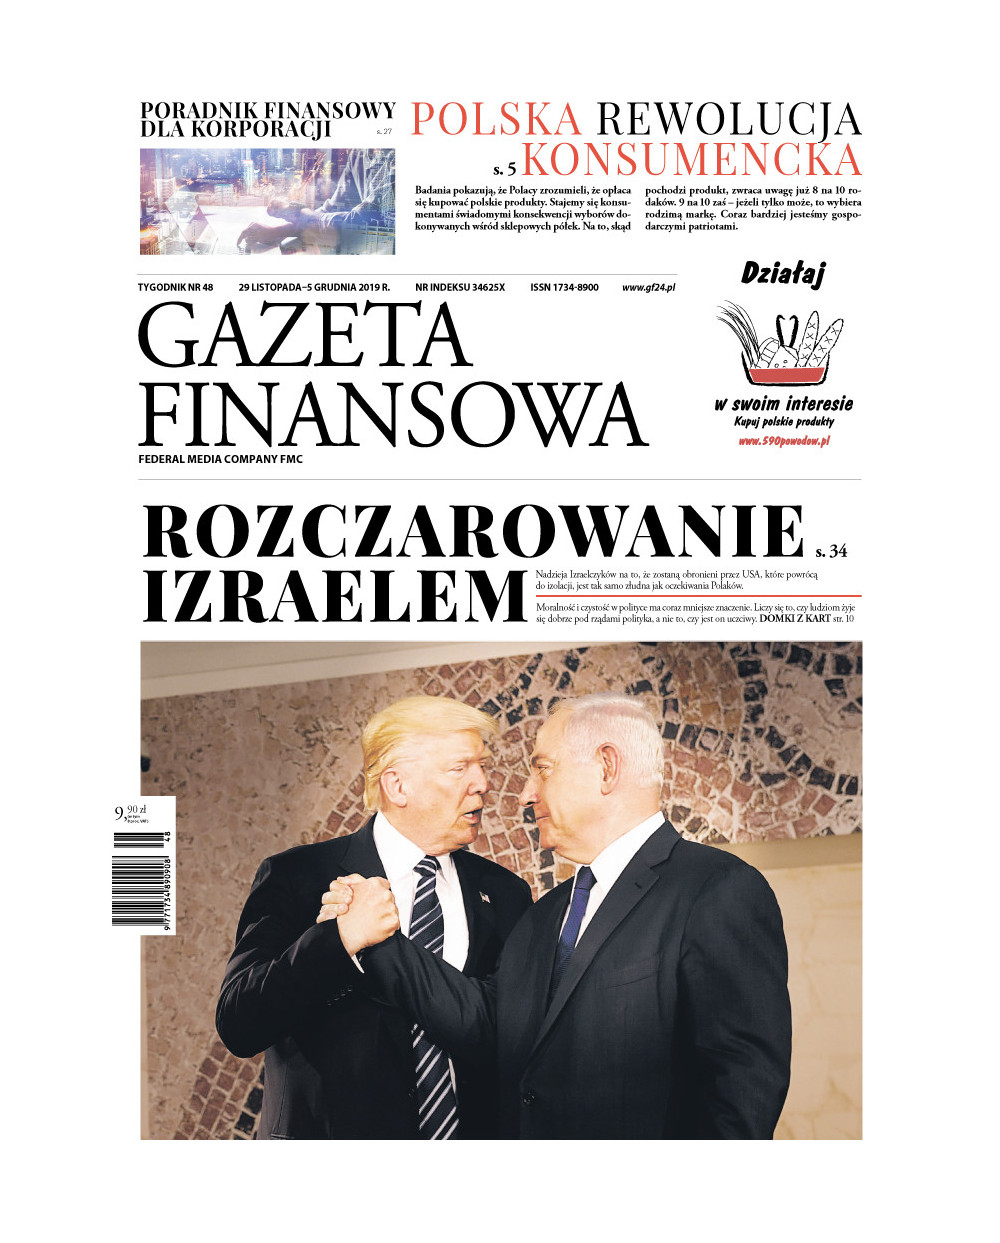 Gazeta Finansowa 48/2019